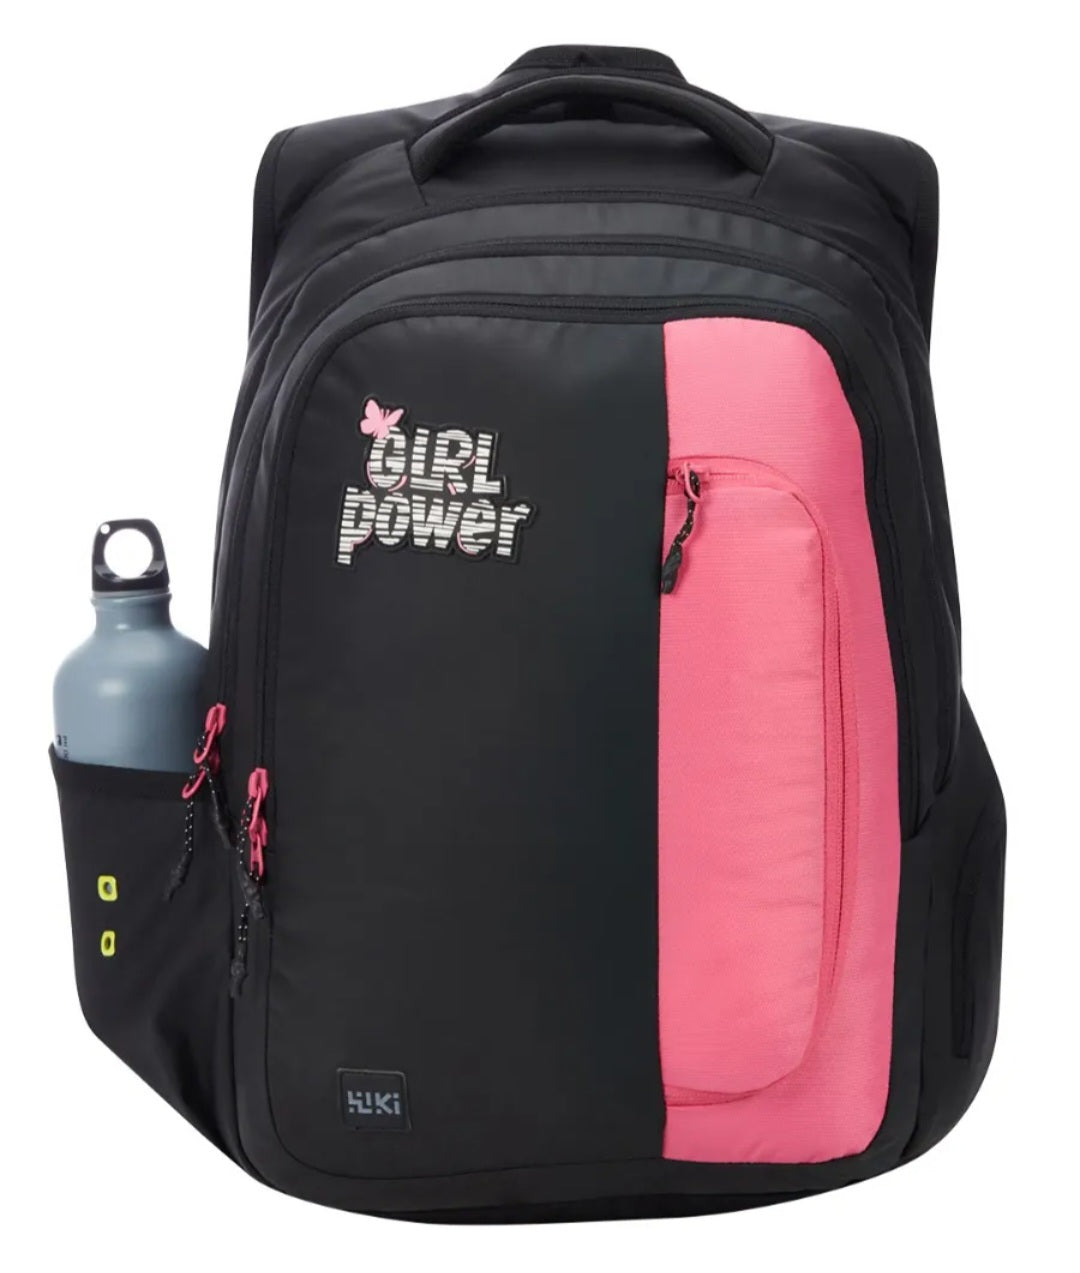 Wildcraft wiki girl 4 coated black school backpack | schol bag